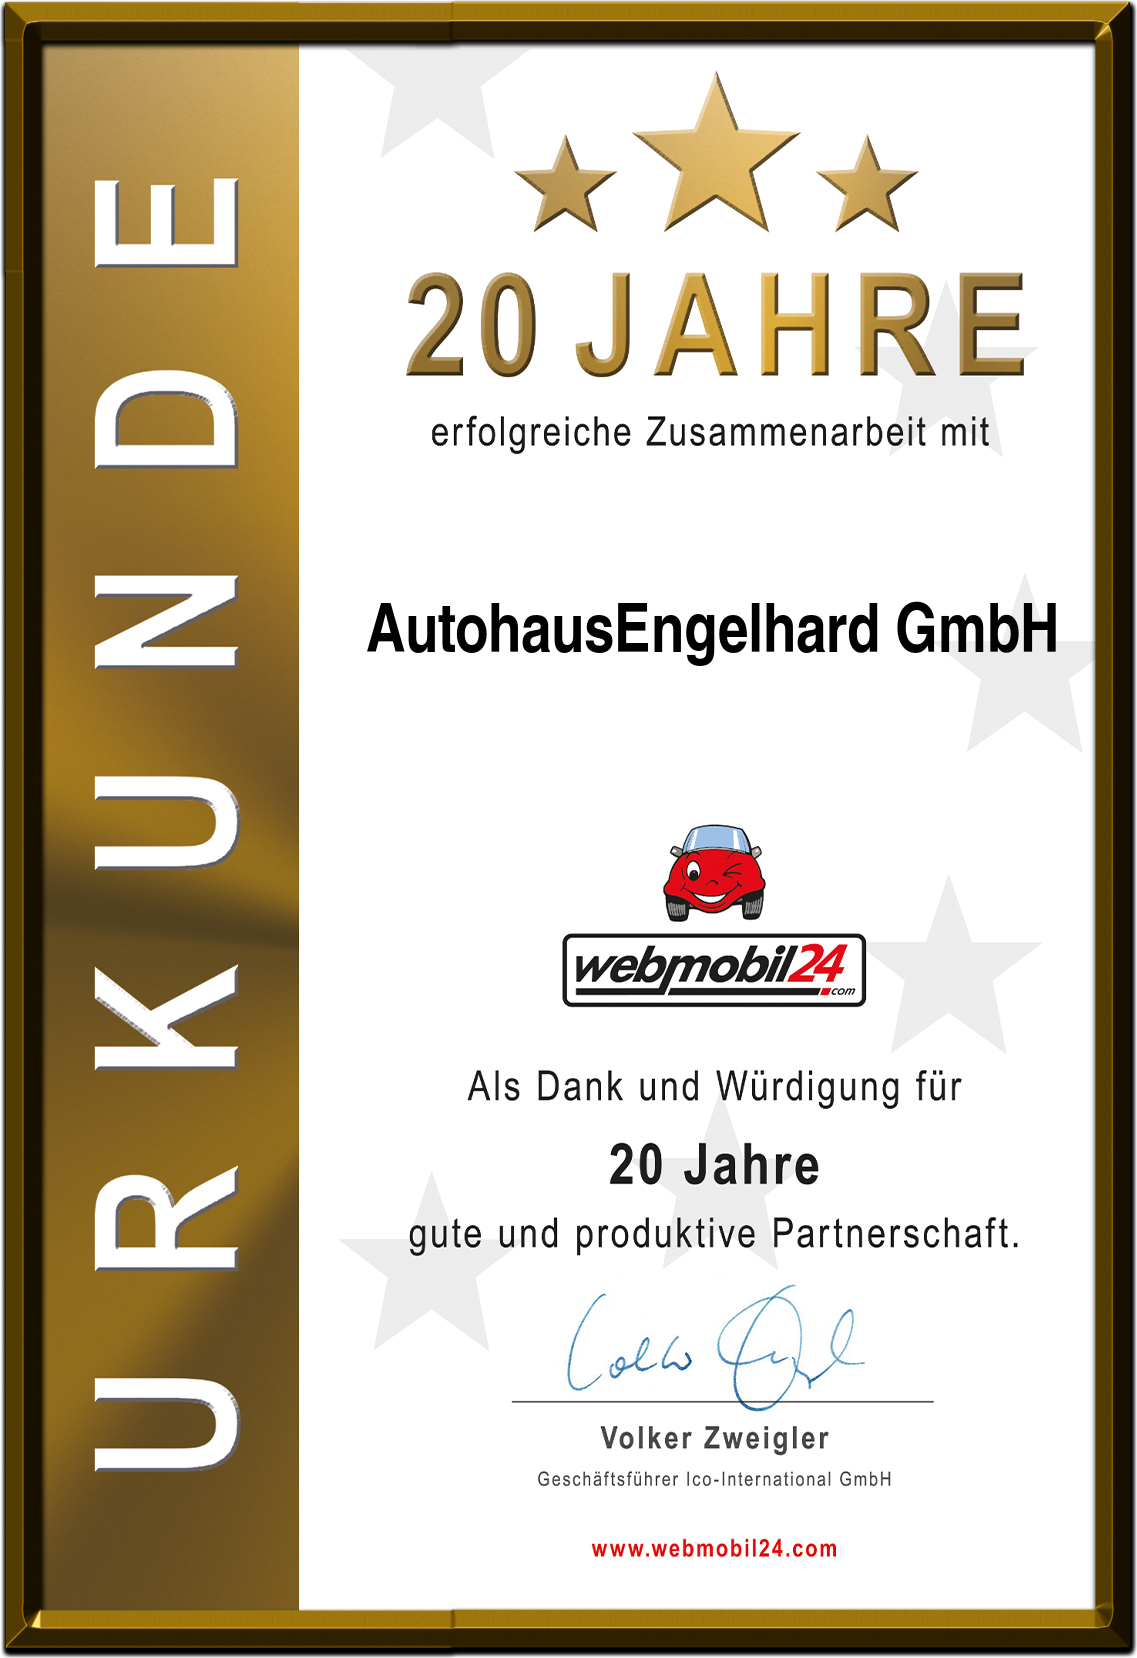 AutohausEngelhard GmbH